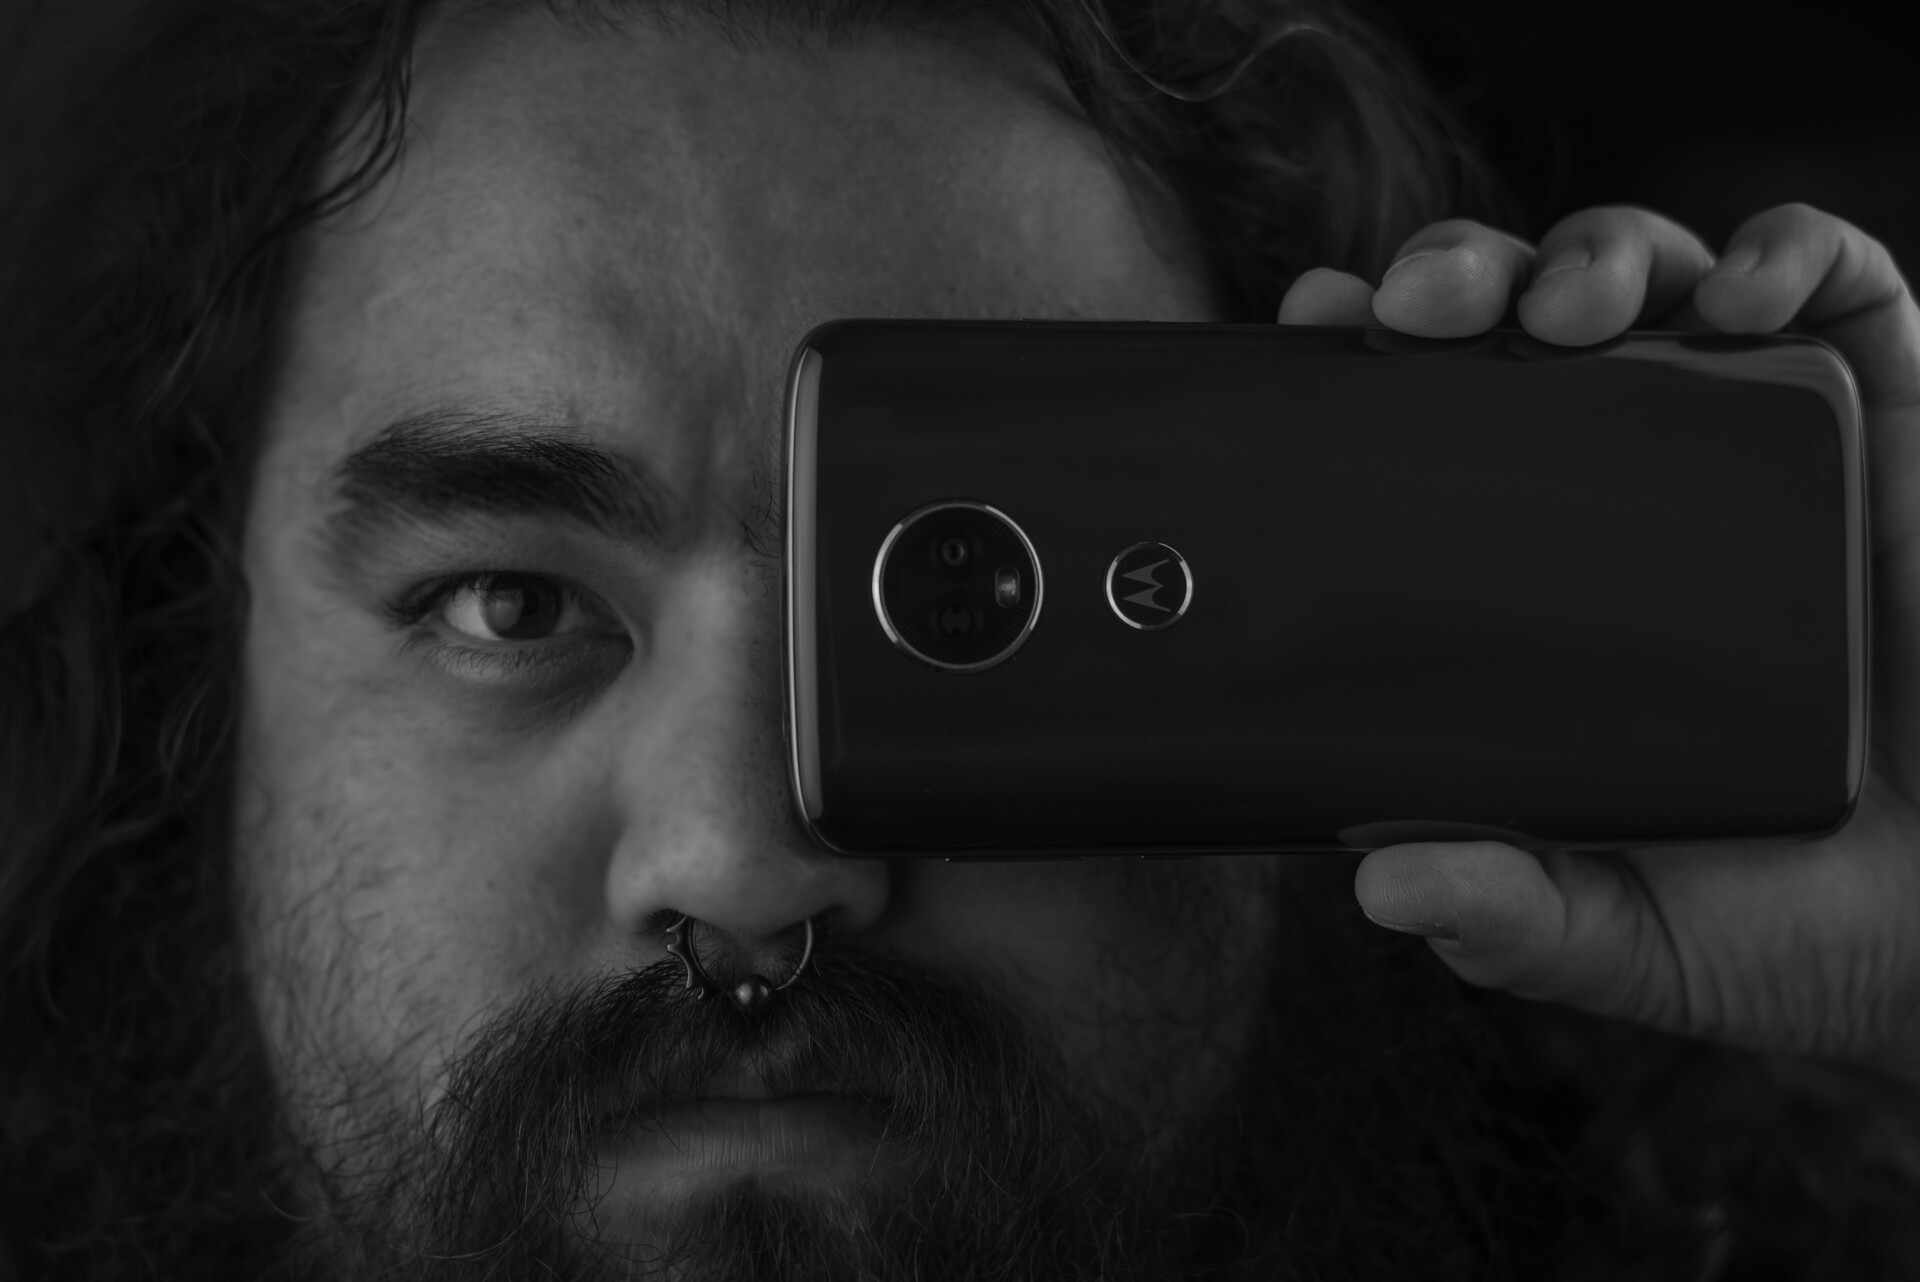 Edgar holding a budget camera phone